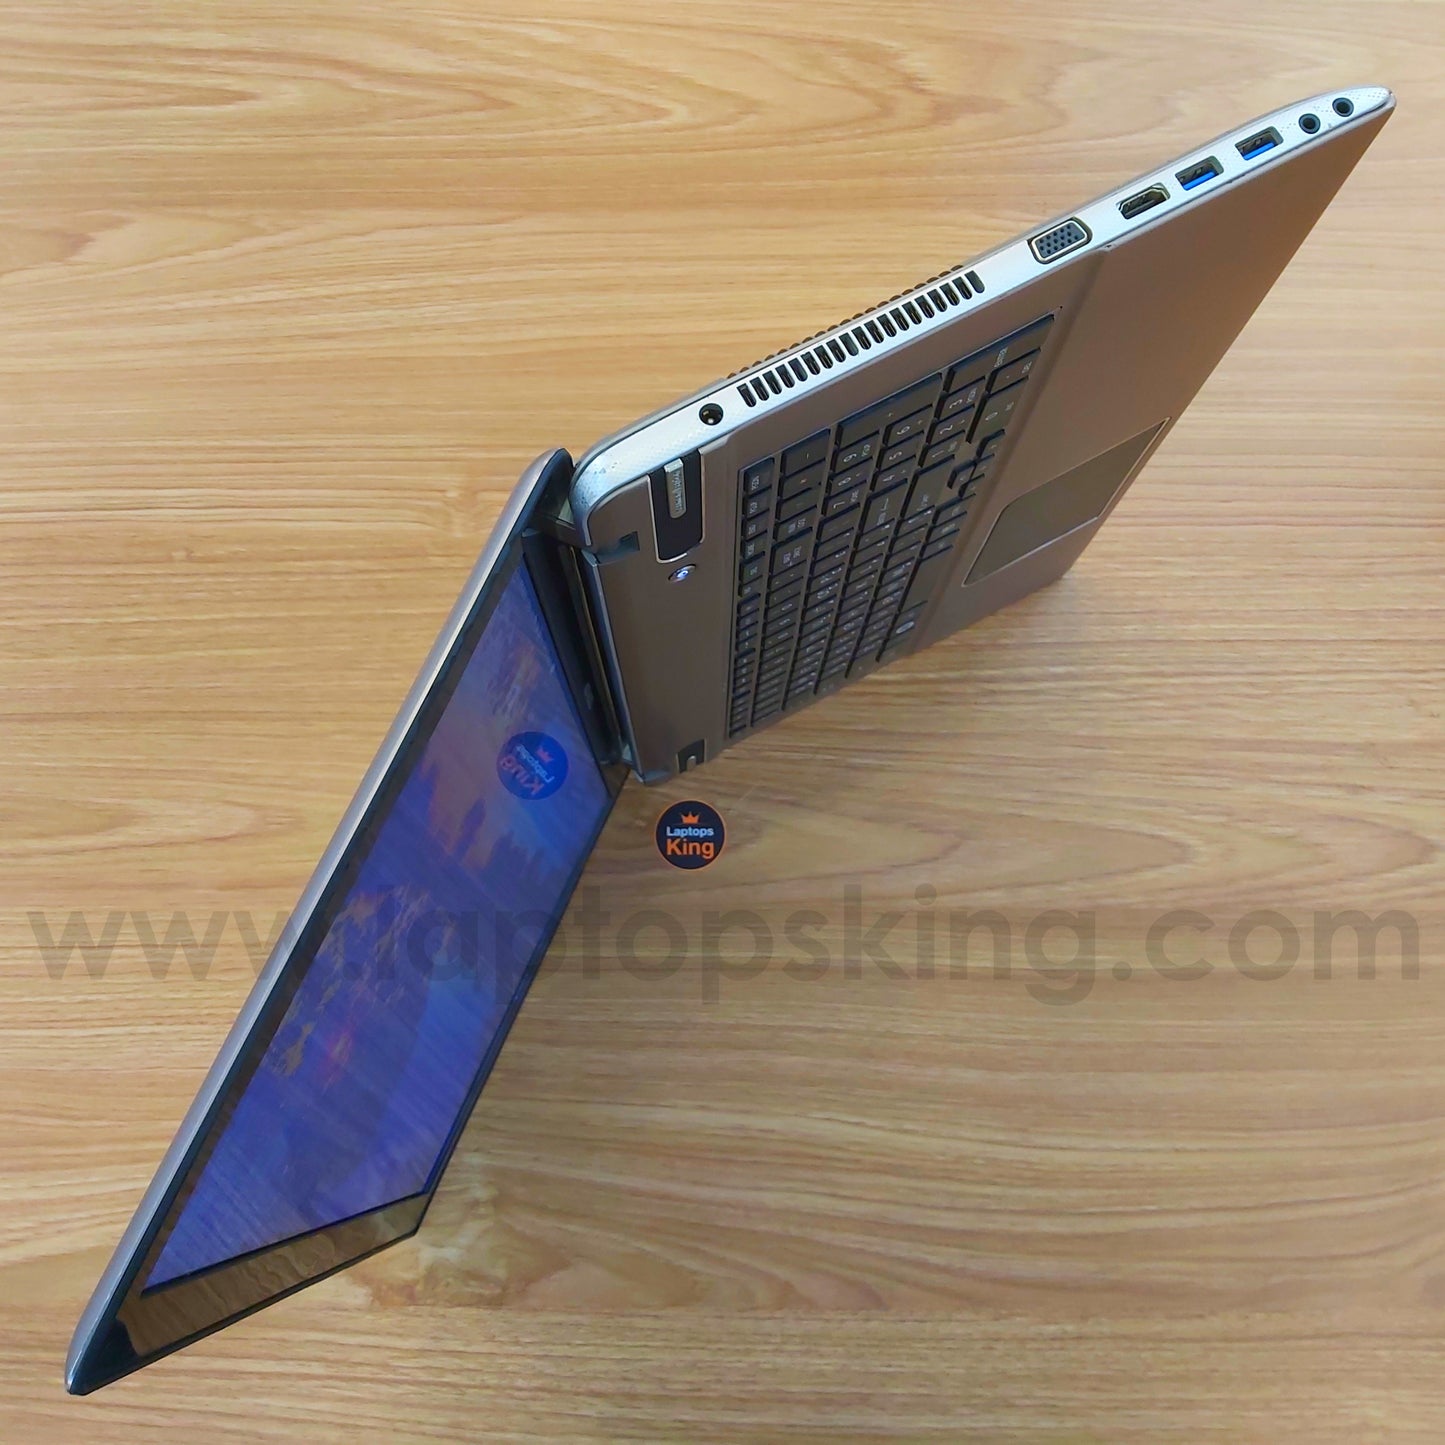 Toshiba Satellite P875 i5 17.3" Laptop (Used Very Clean)